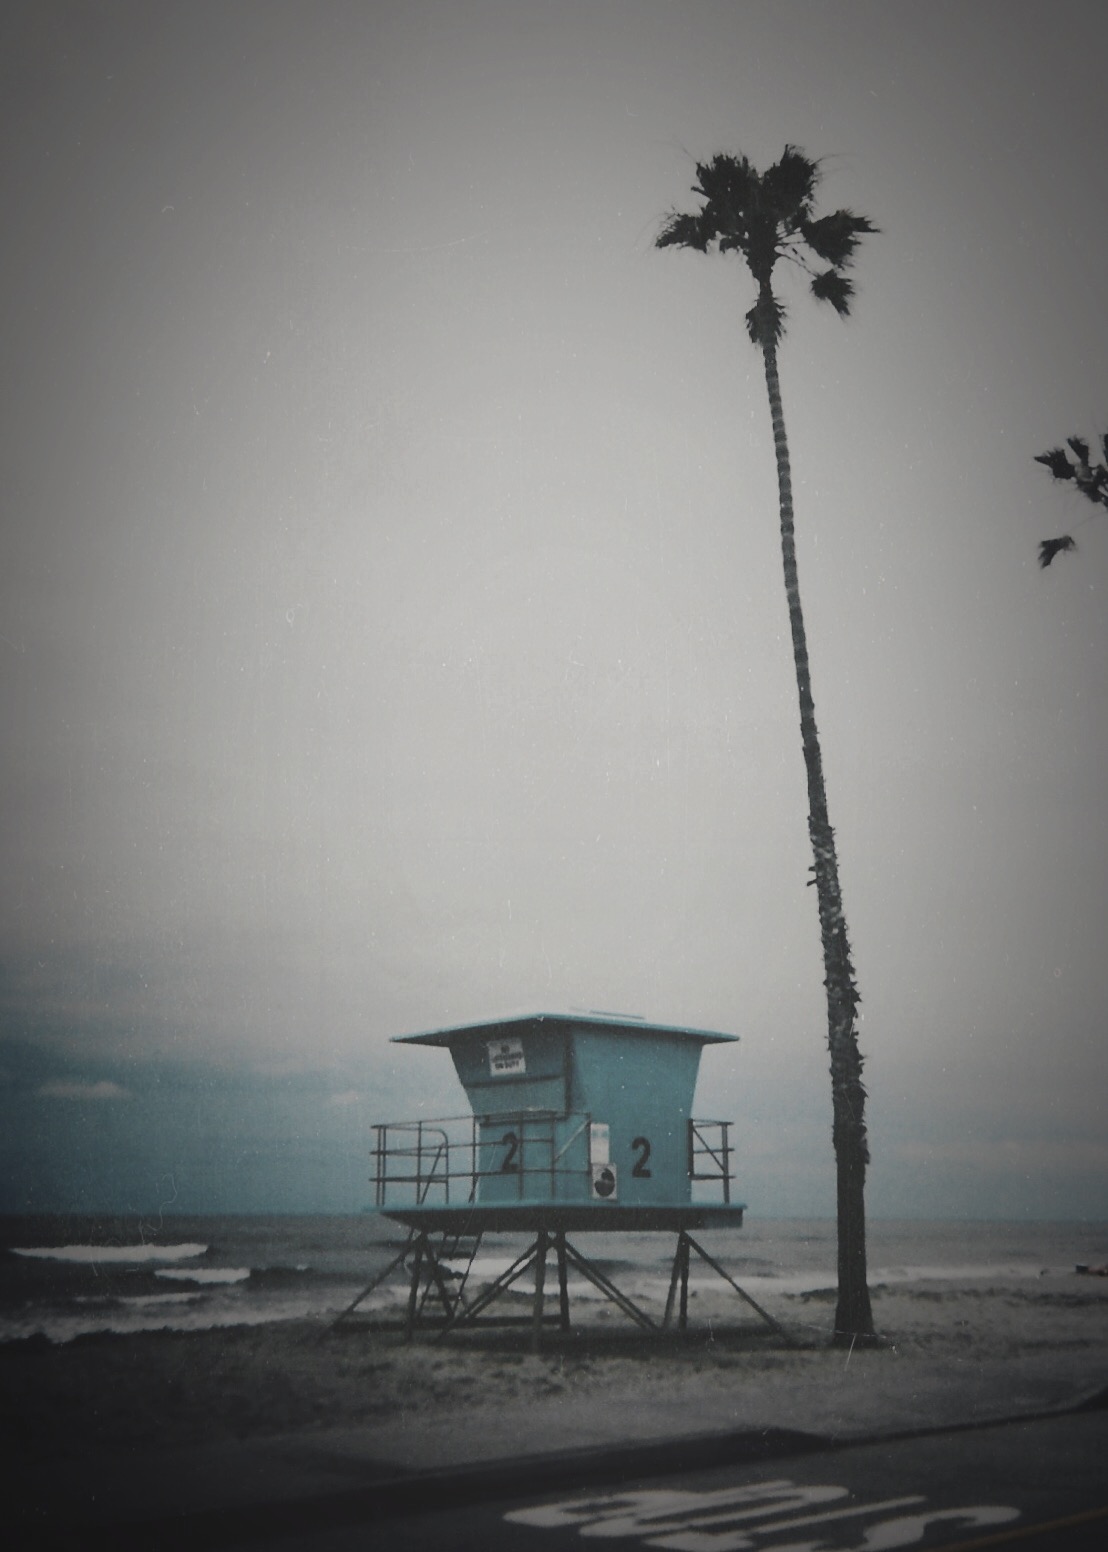 Oceanside, CA